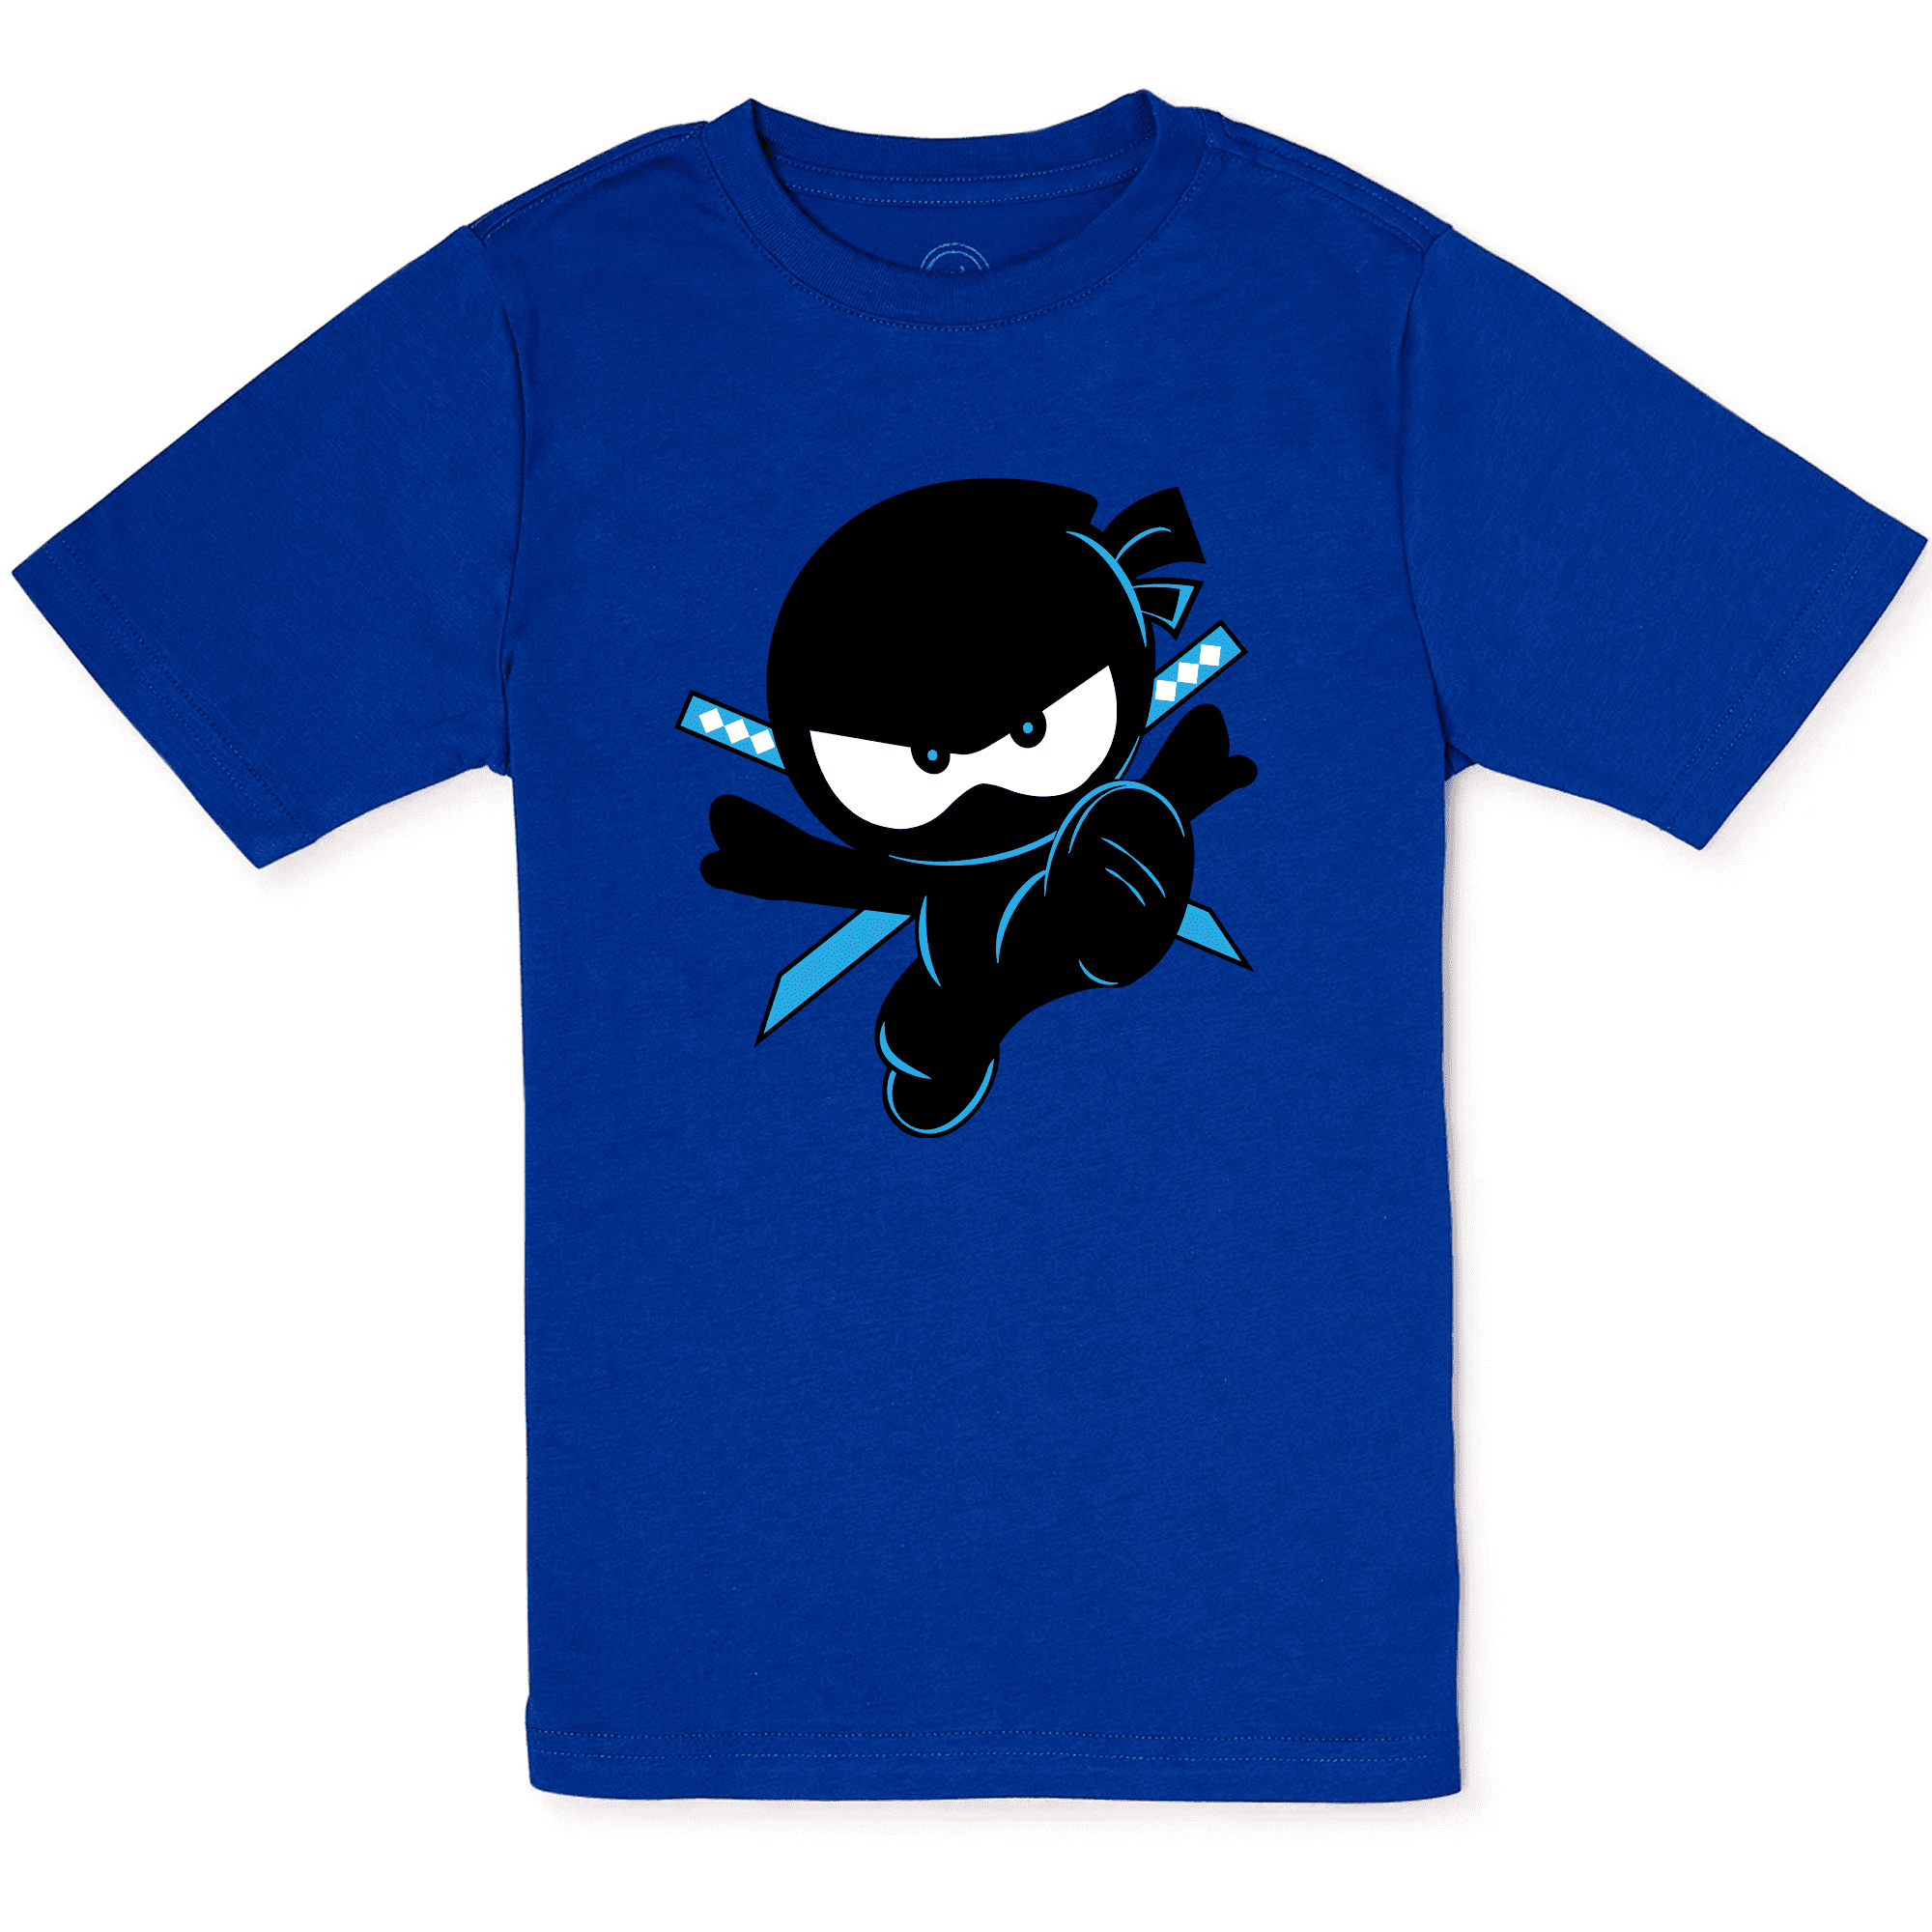 Ninja Tee for Kids - Dress Your Ninja in Cool Gear! Size 6-7